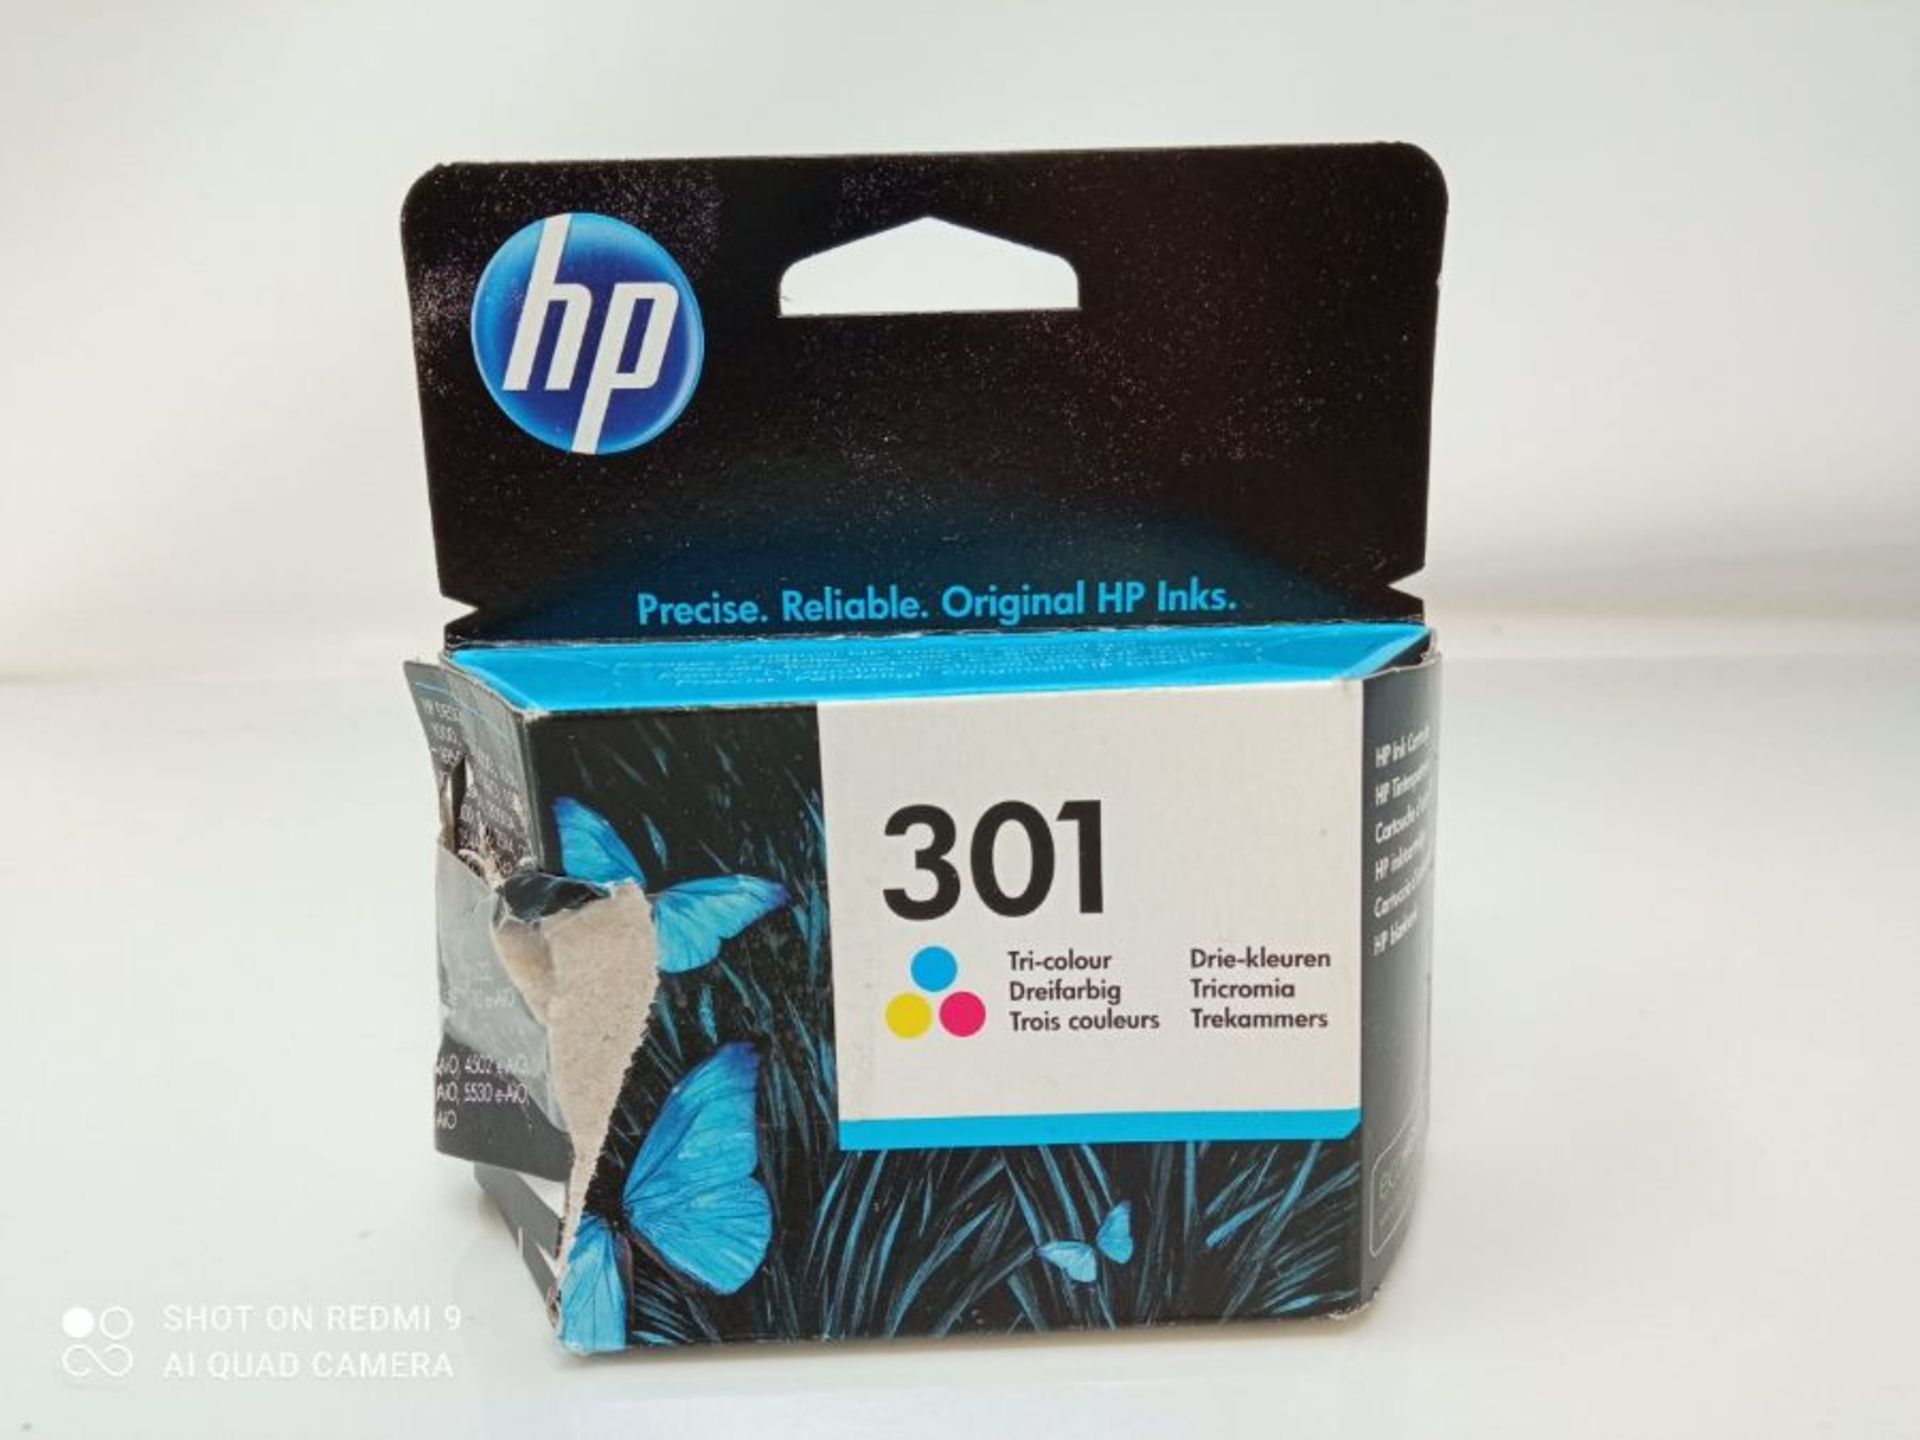 HP CH562EE 301 Original Ink Cartridge, Tri-color, Single Pack - Image 2 of 3